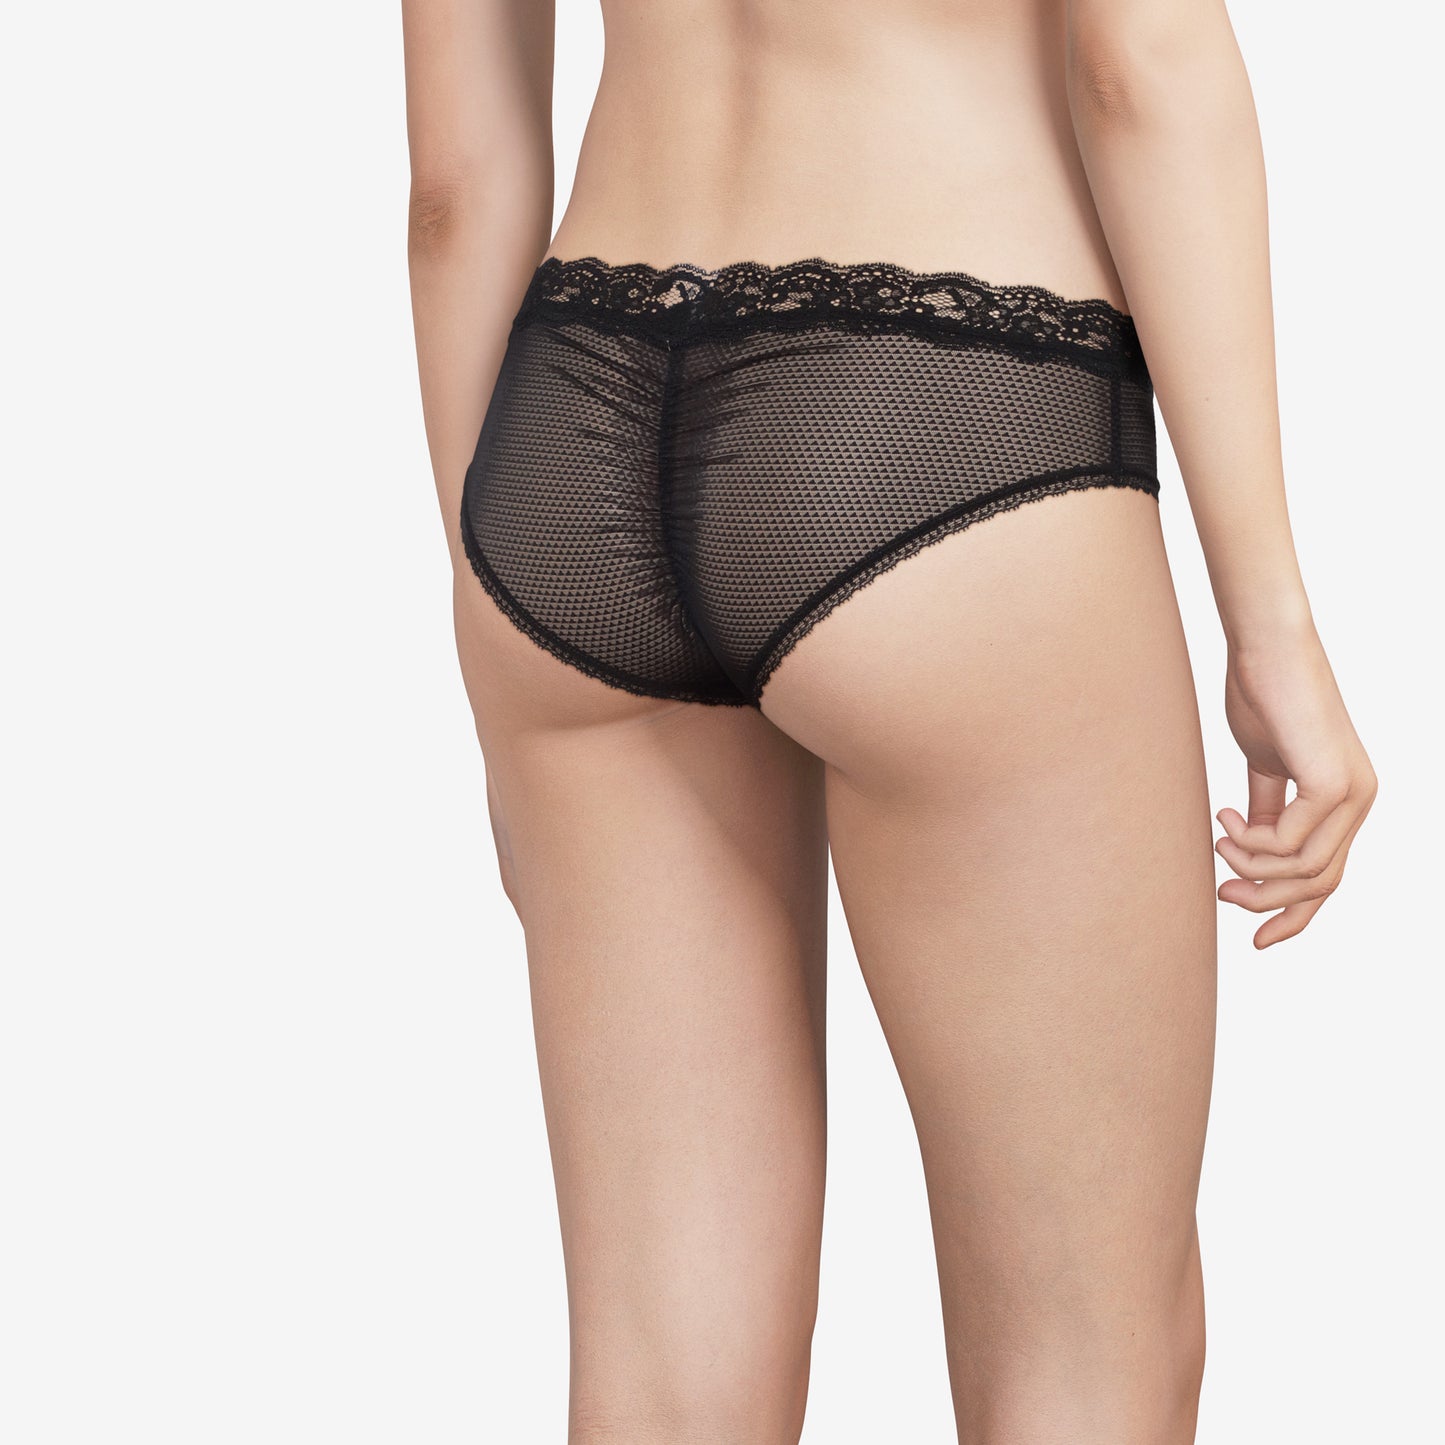 Pretty Things Chantelle Passionata Black Short - Underwear Specialists 